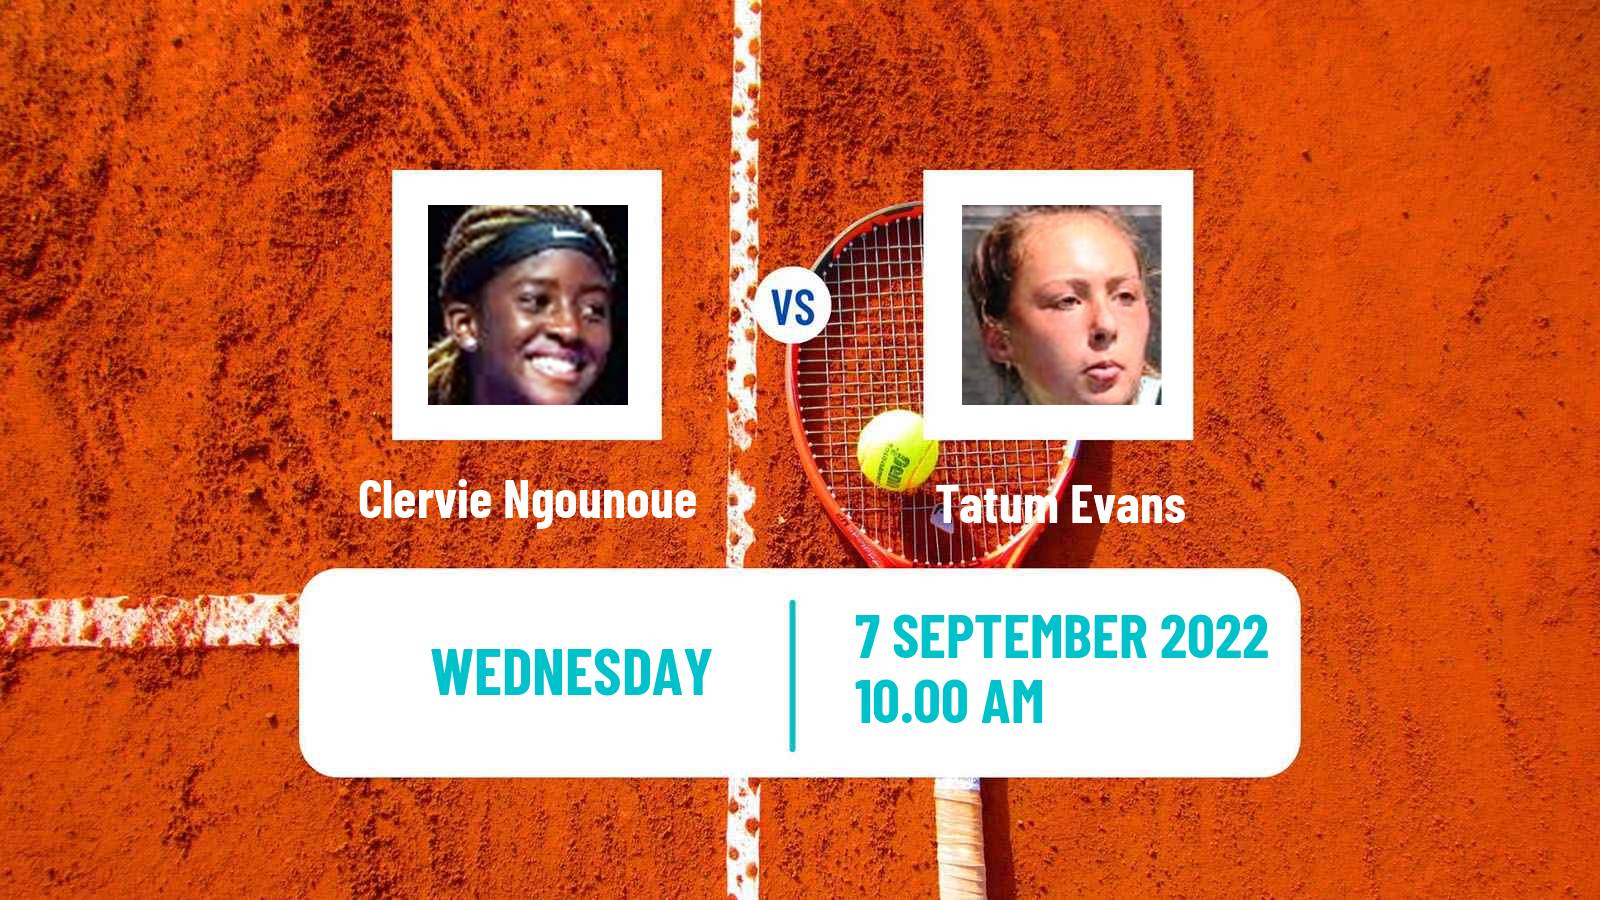 Tennis Girls Singles US Open Clervie Ngounoue - Tatum Evans